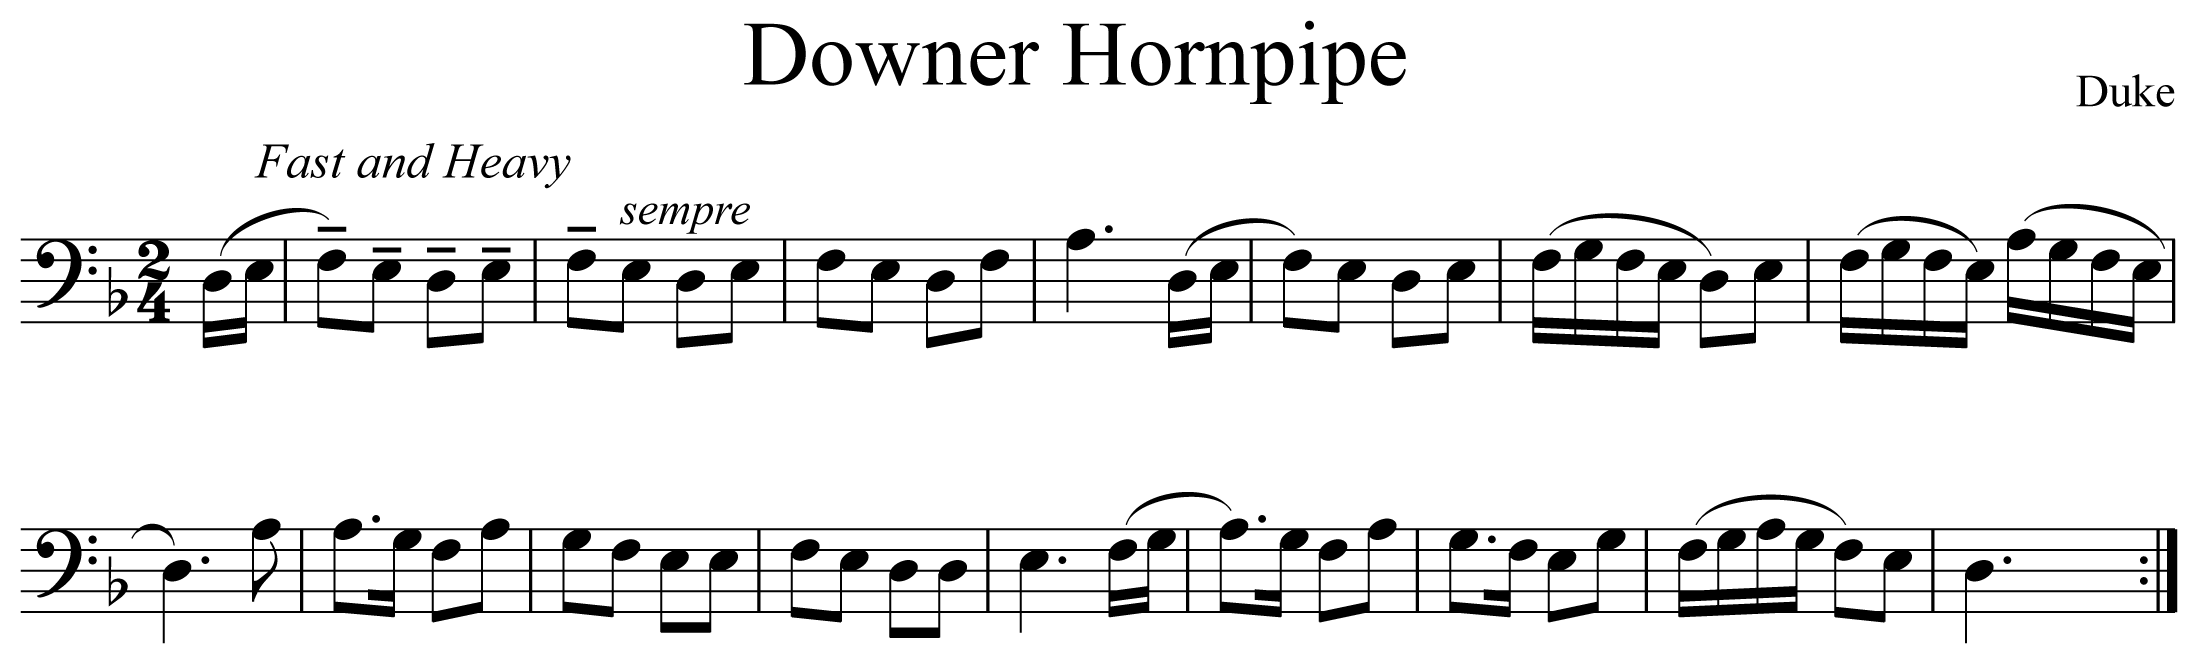 Downer Hornpipe Notation Euphonium